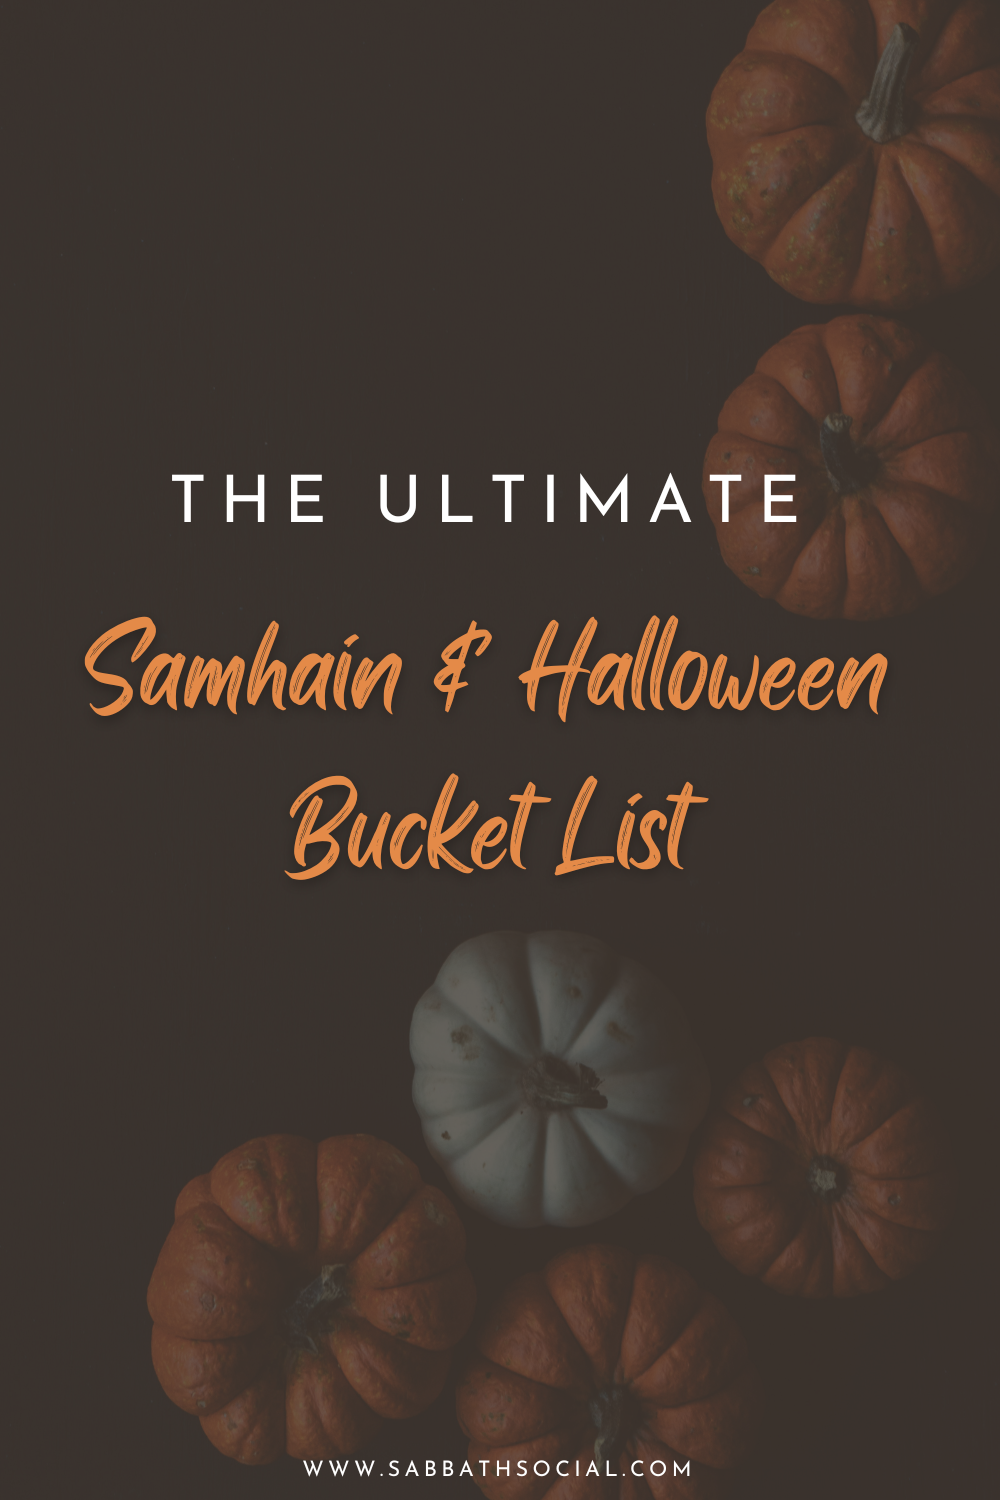 The Ultimate Samhain & Halloween Bucket List